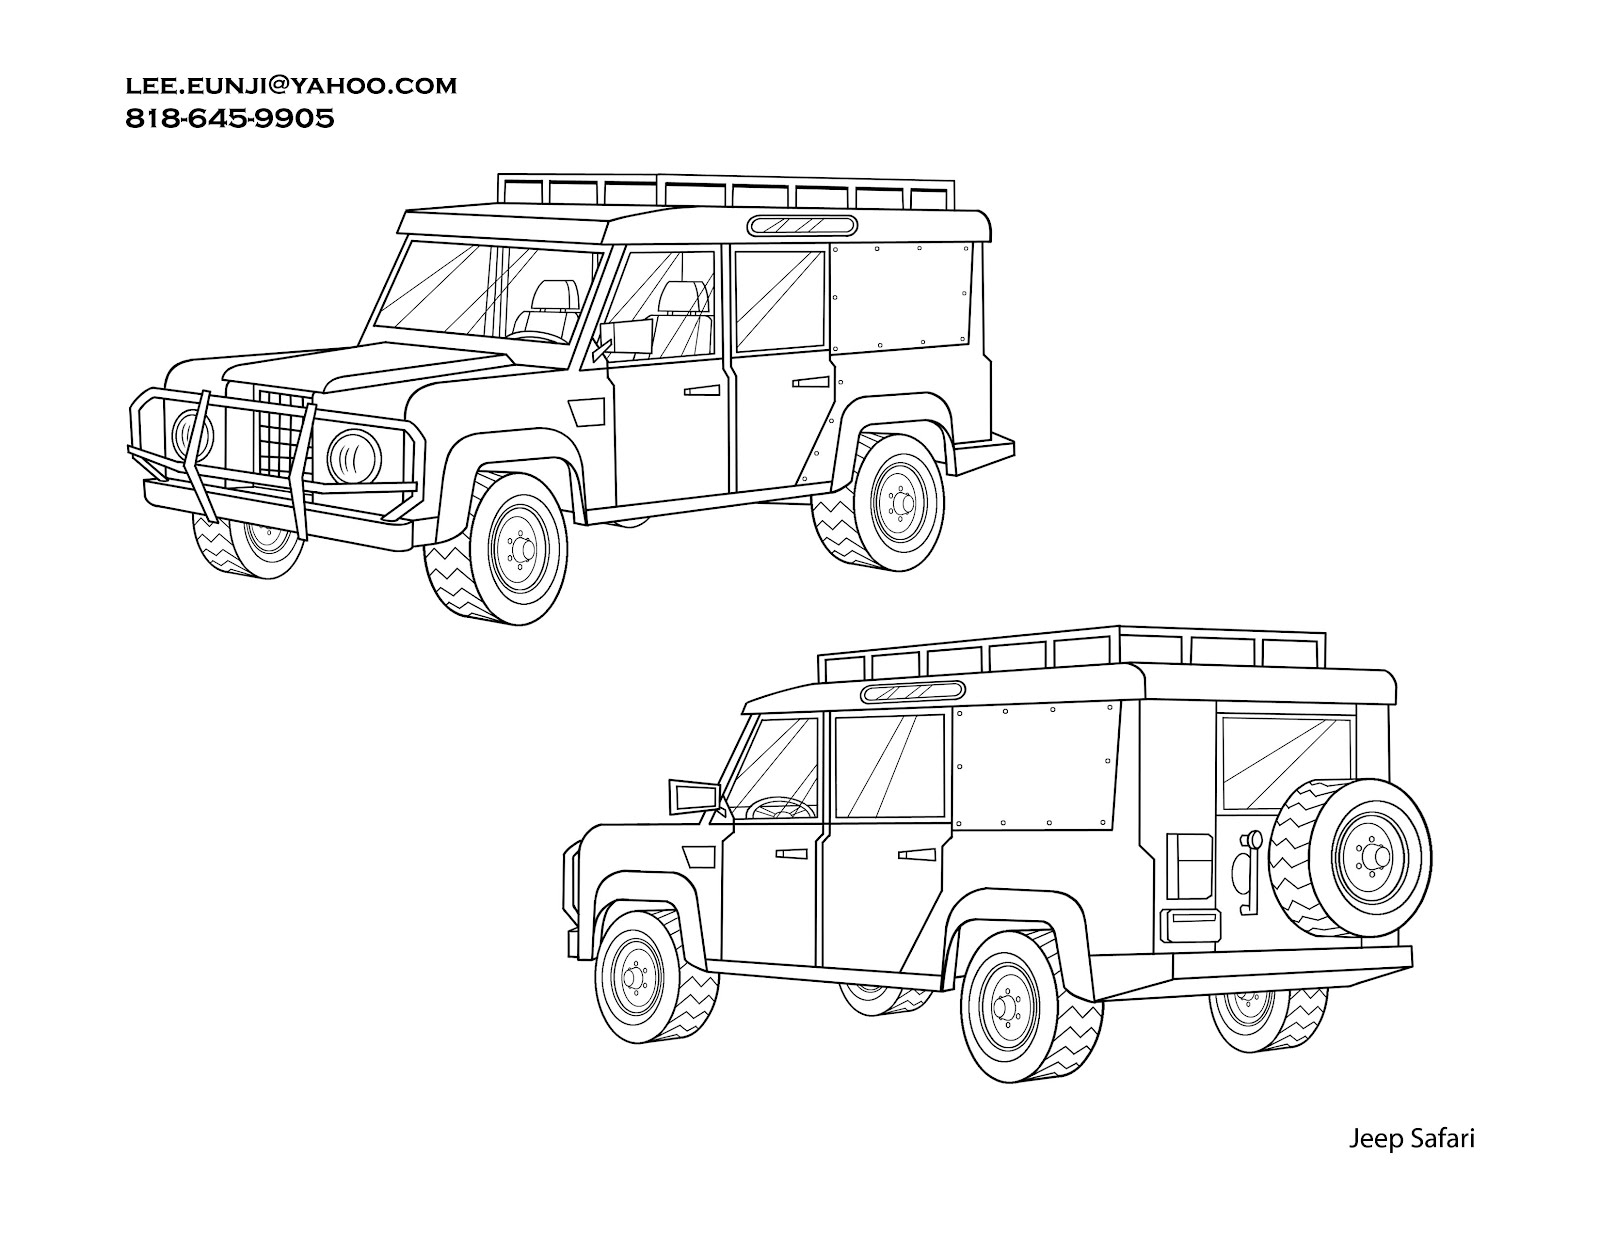 Jeep safari template #1